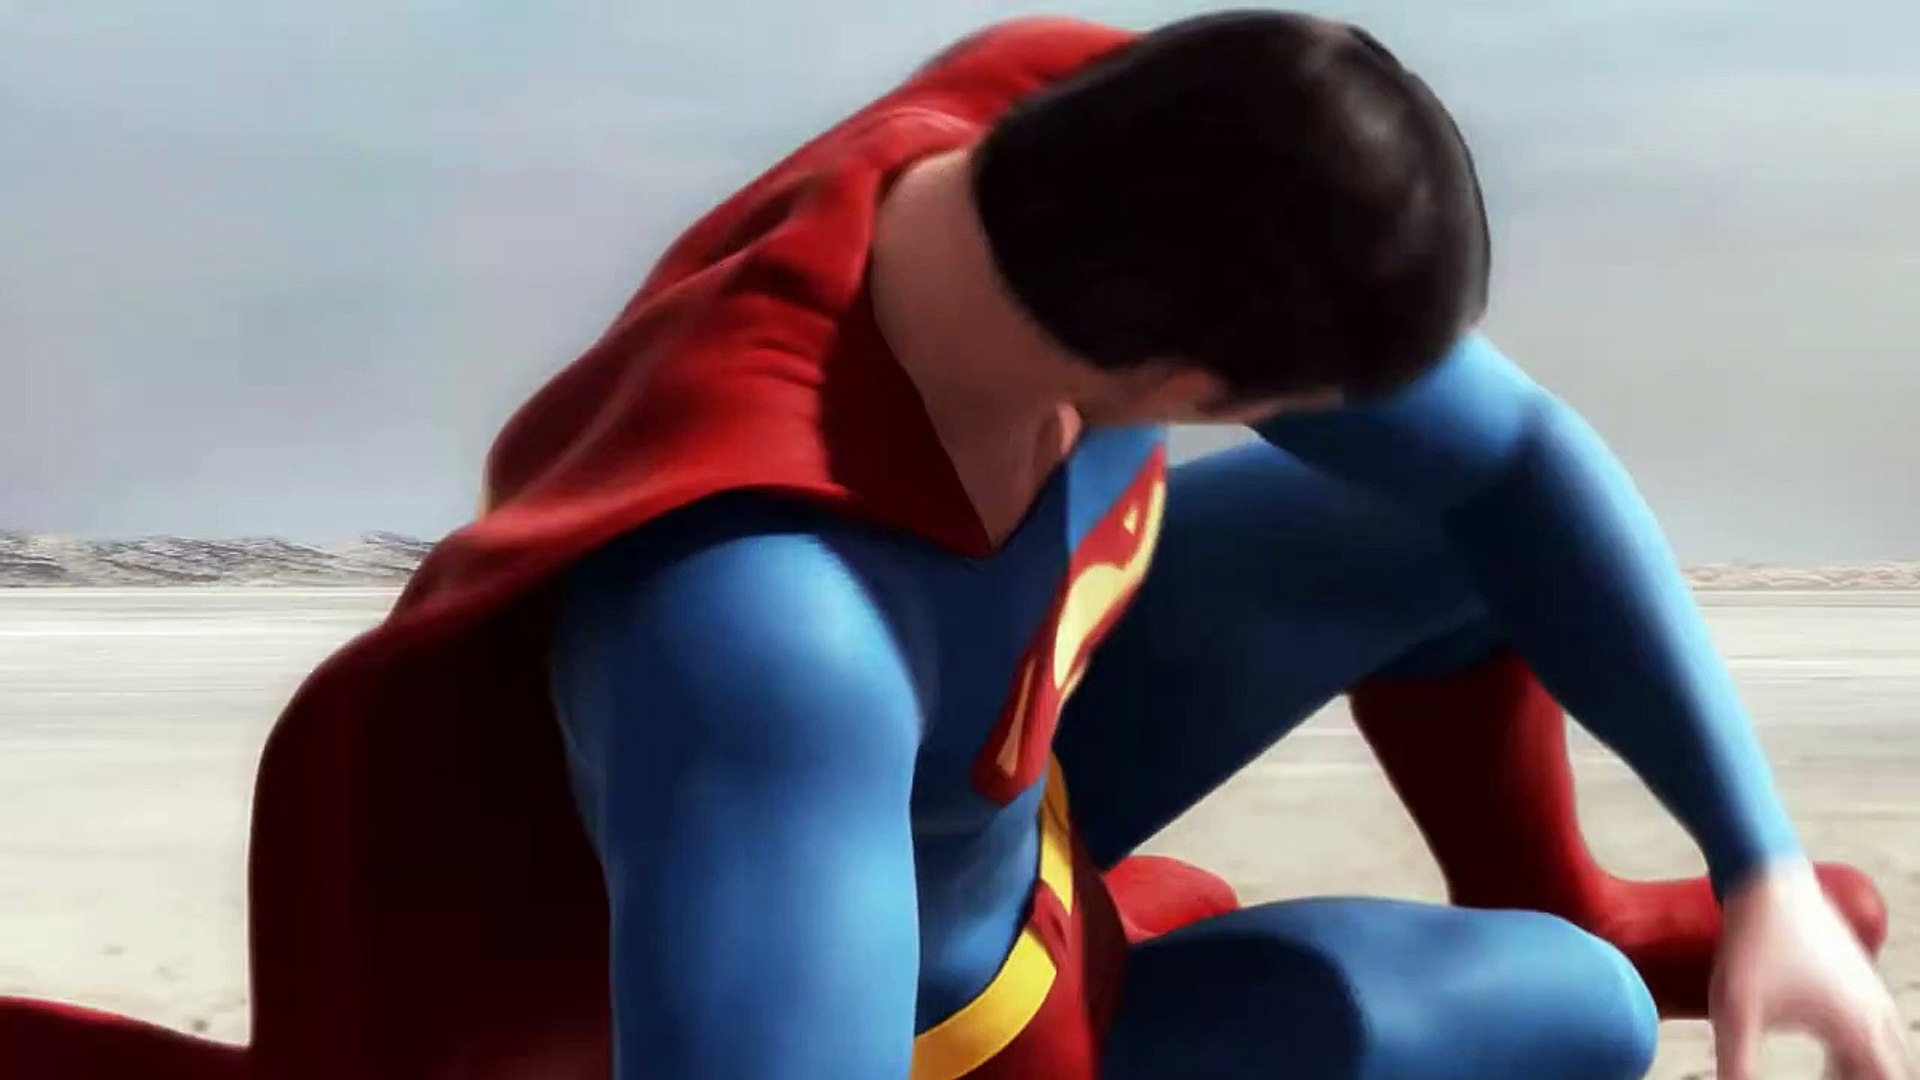 Superman vs Hulk - The Fight (Part 1) - video Dailymotion